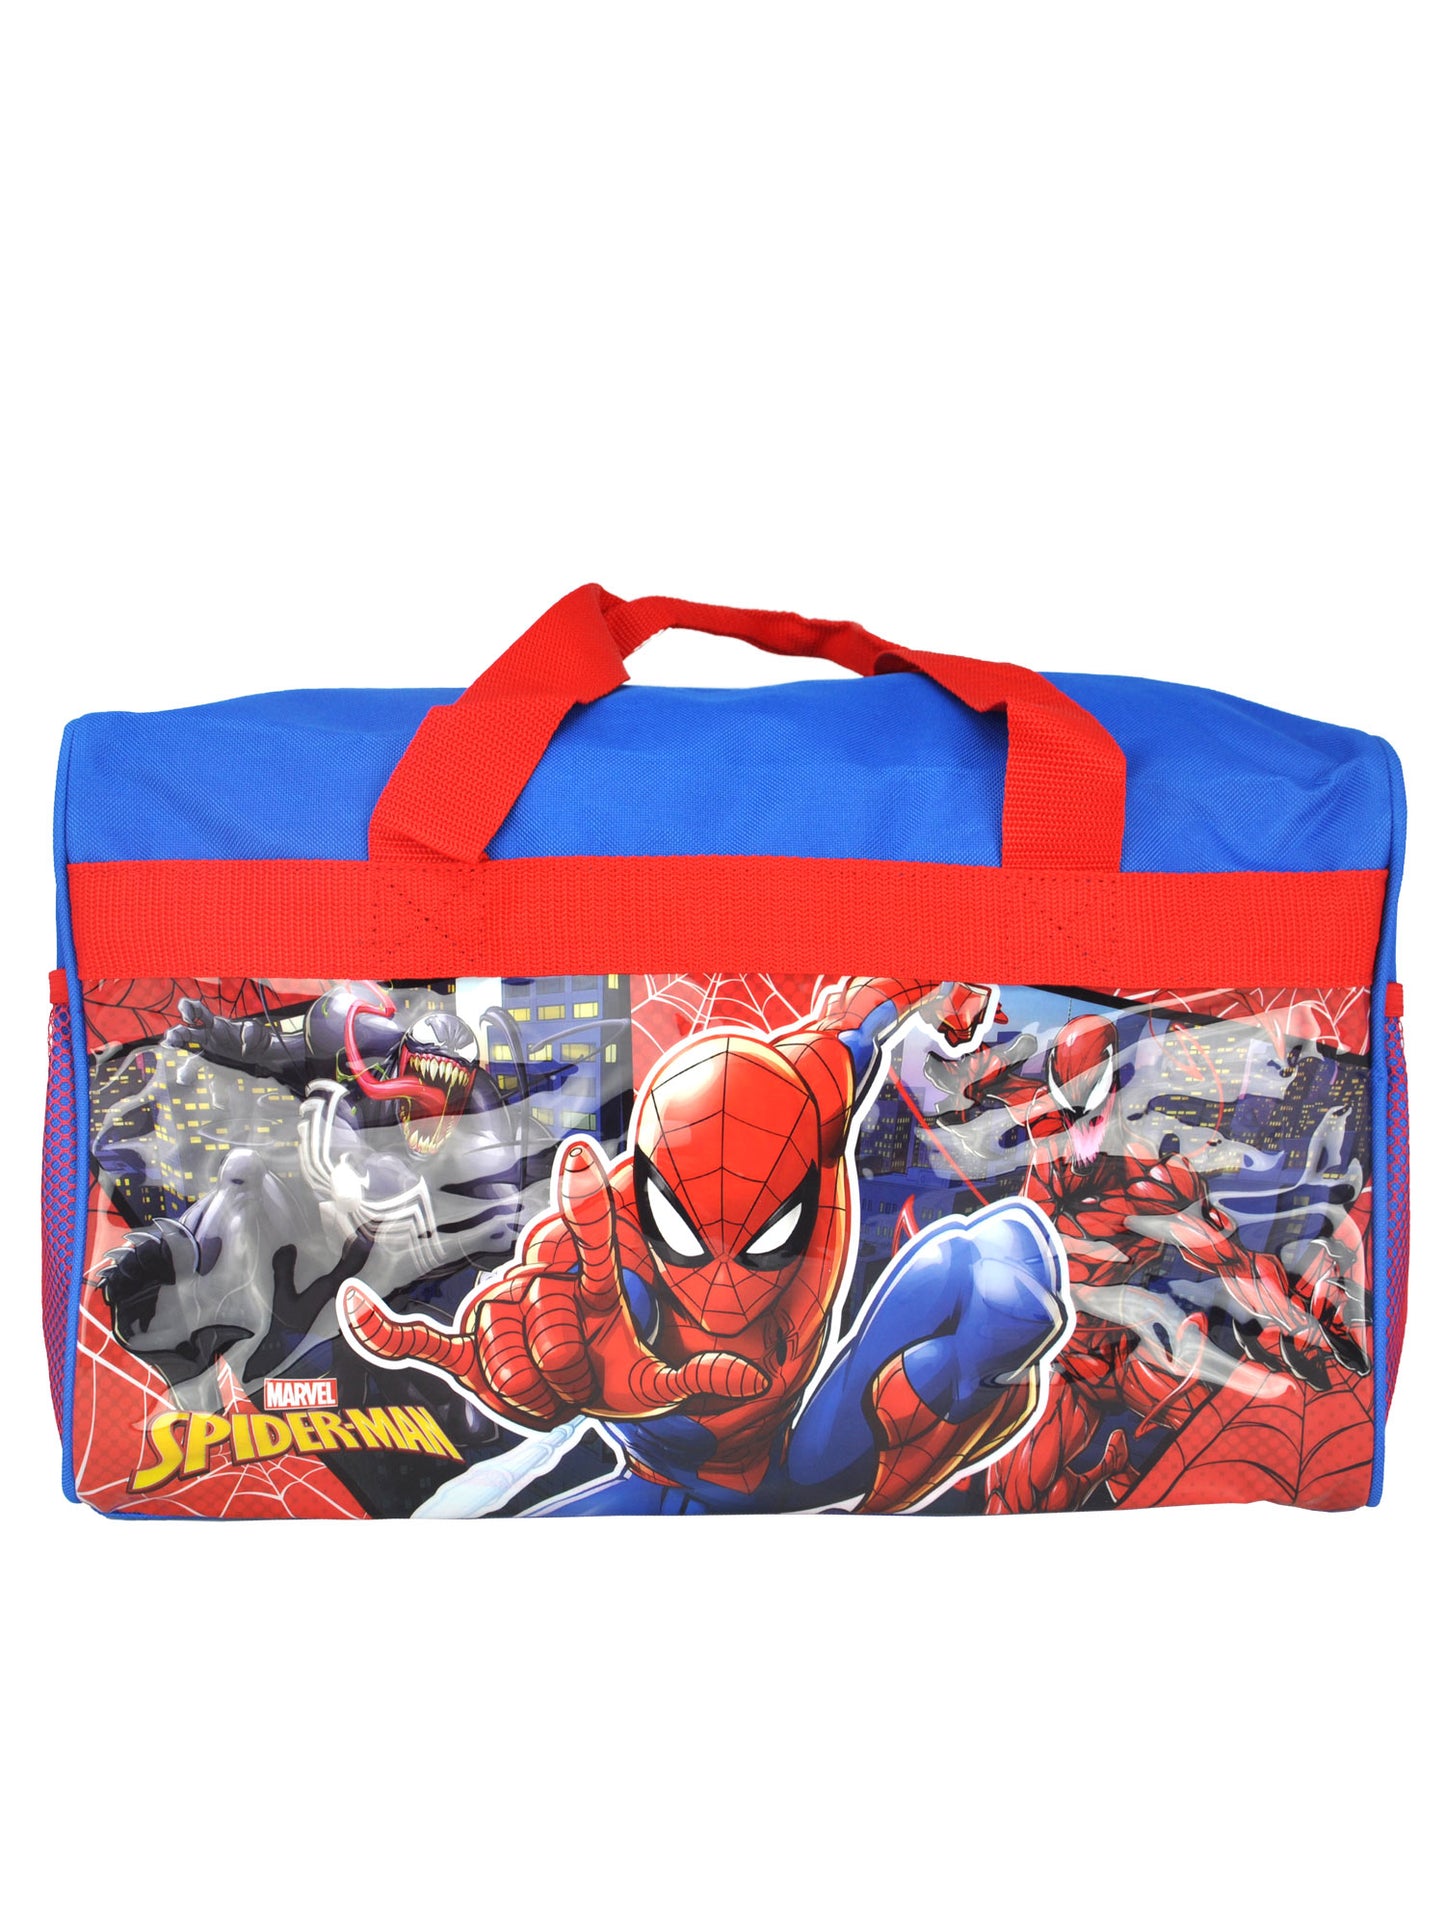 Marvel Spider-Man Duffel Bag 17" Travel Carry-On & Avenger 4-Sheet Sticker Book